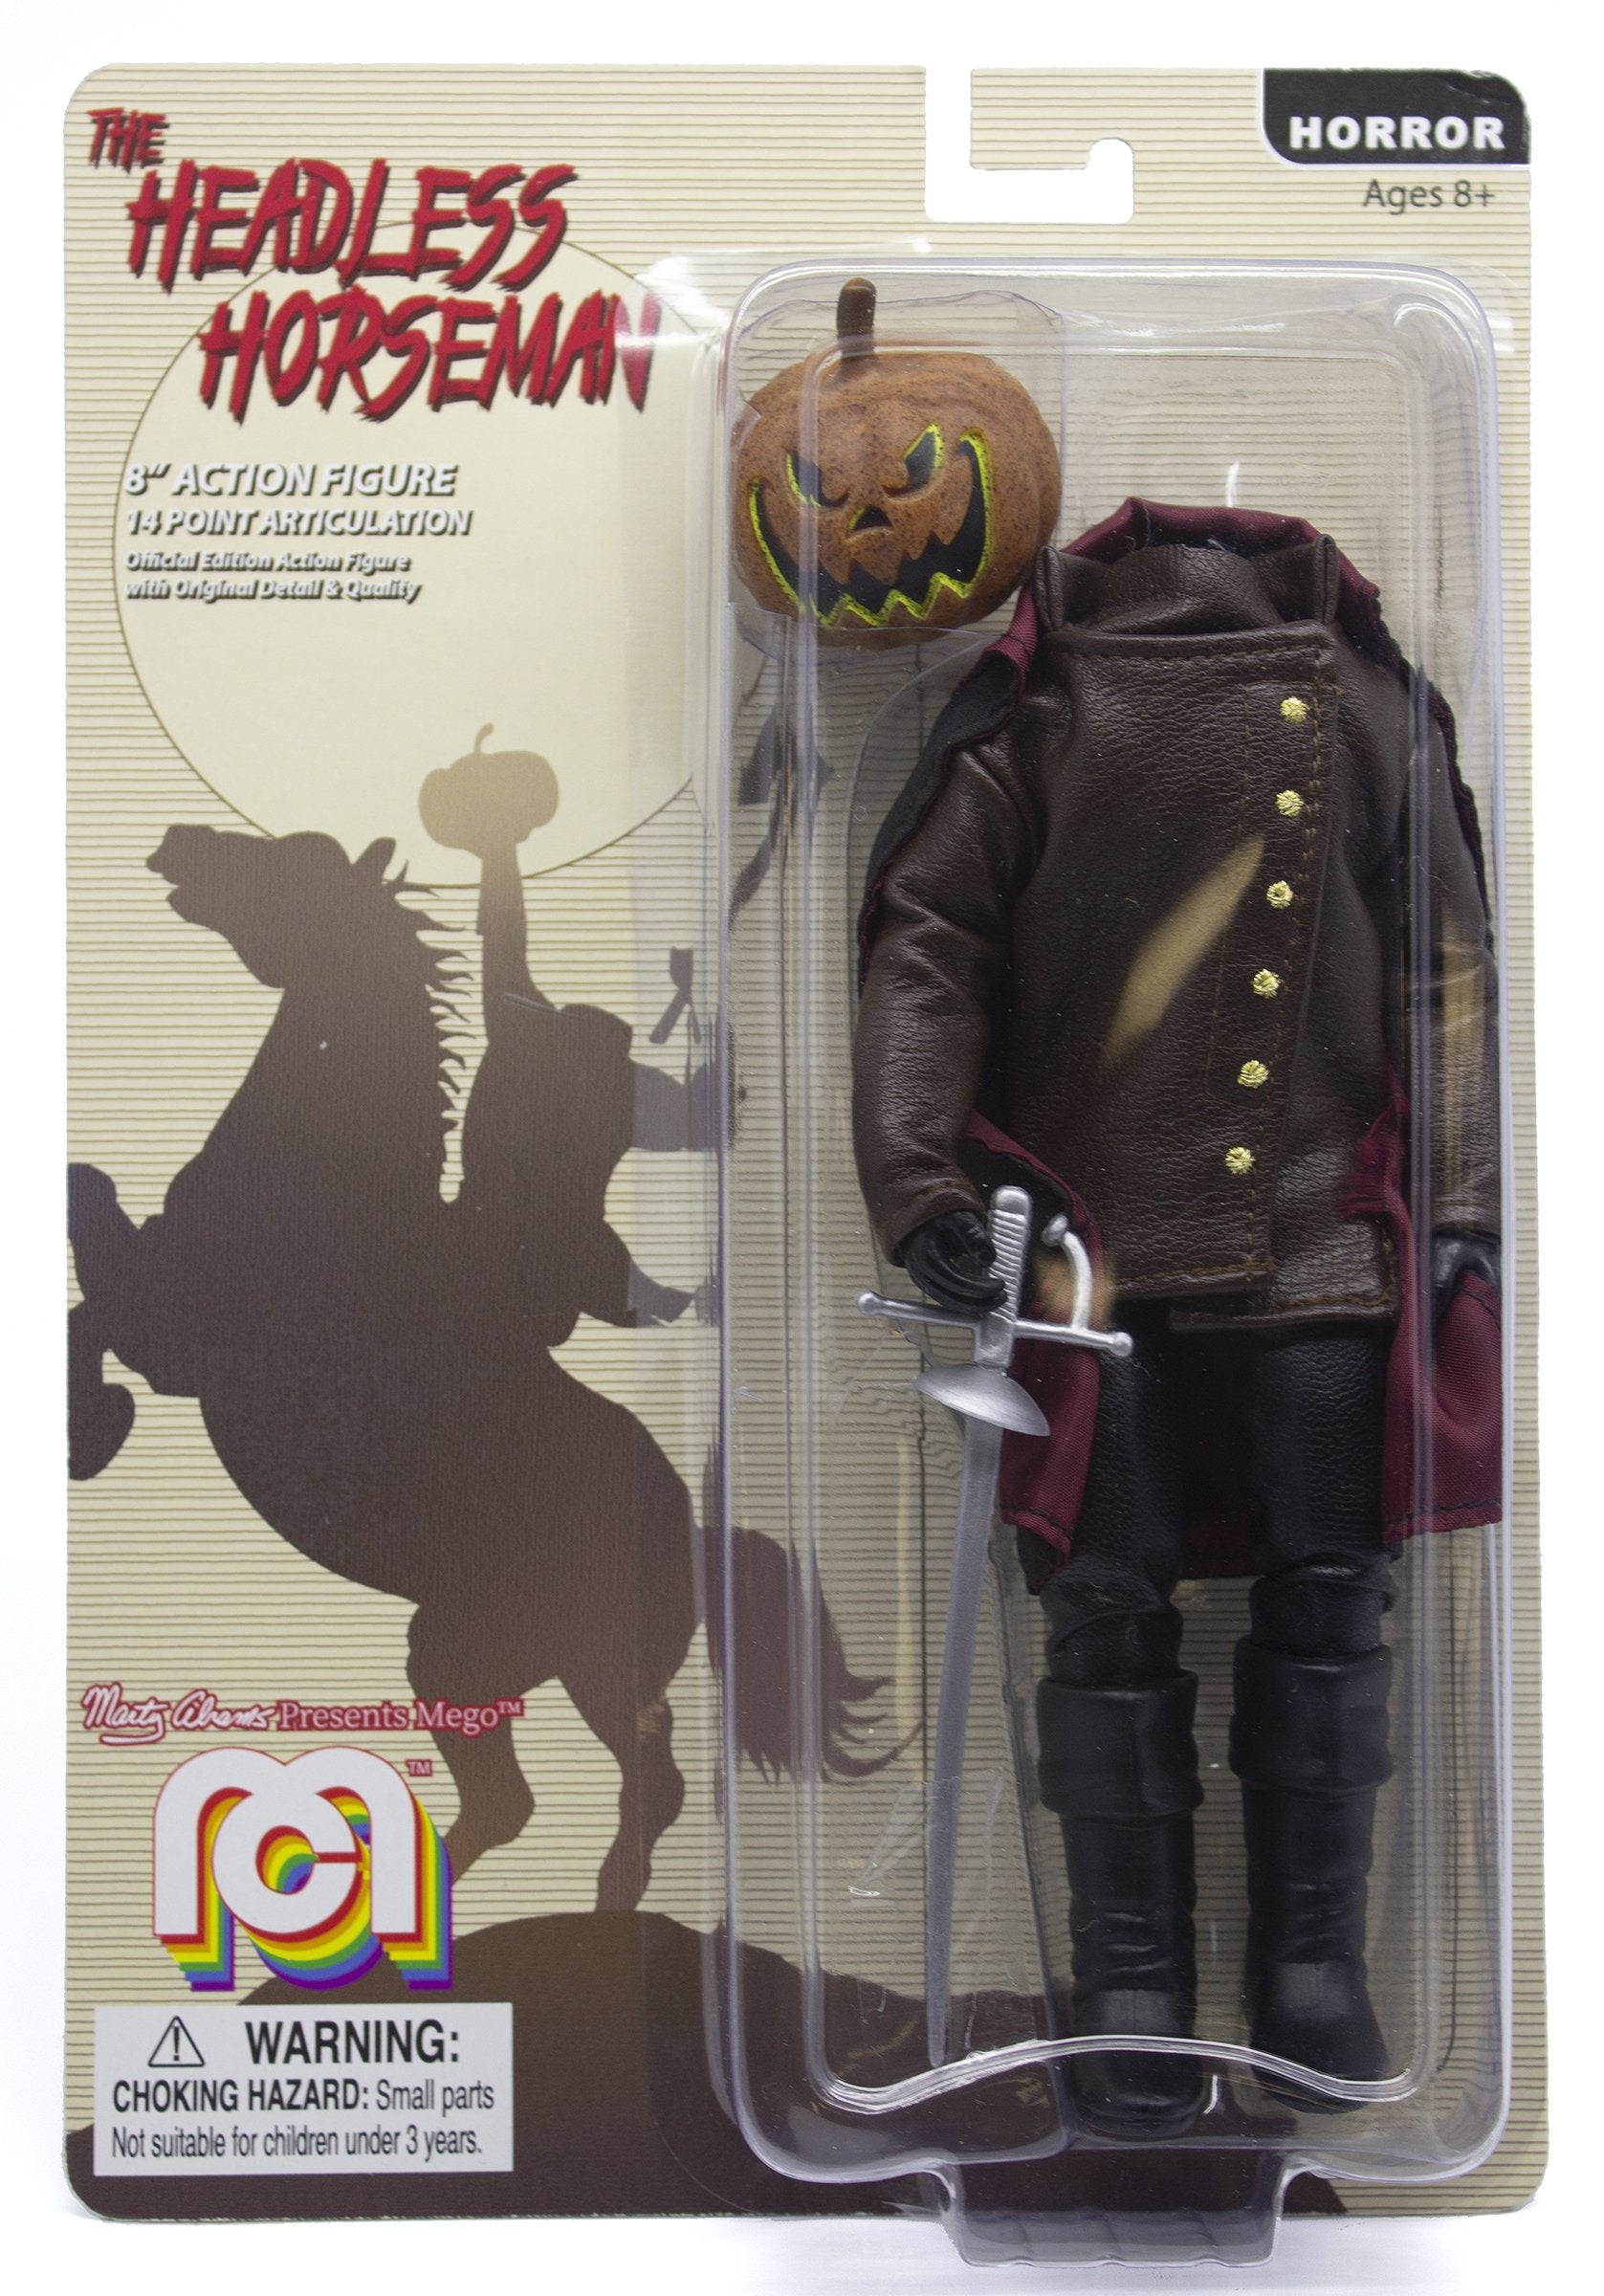 Mego Horror Wave 7 - Headless Horseman 8" Action Figure - Zlc Collectibles